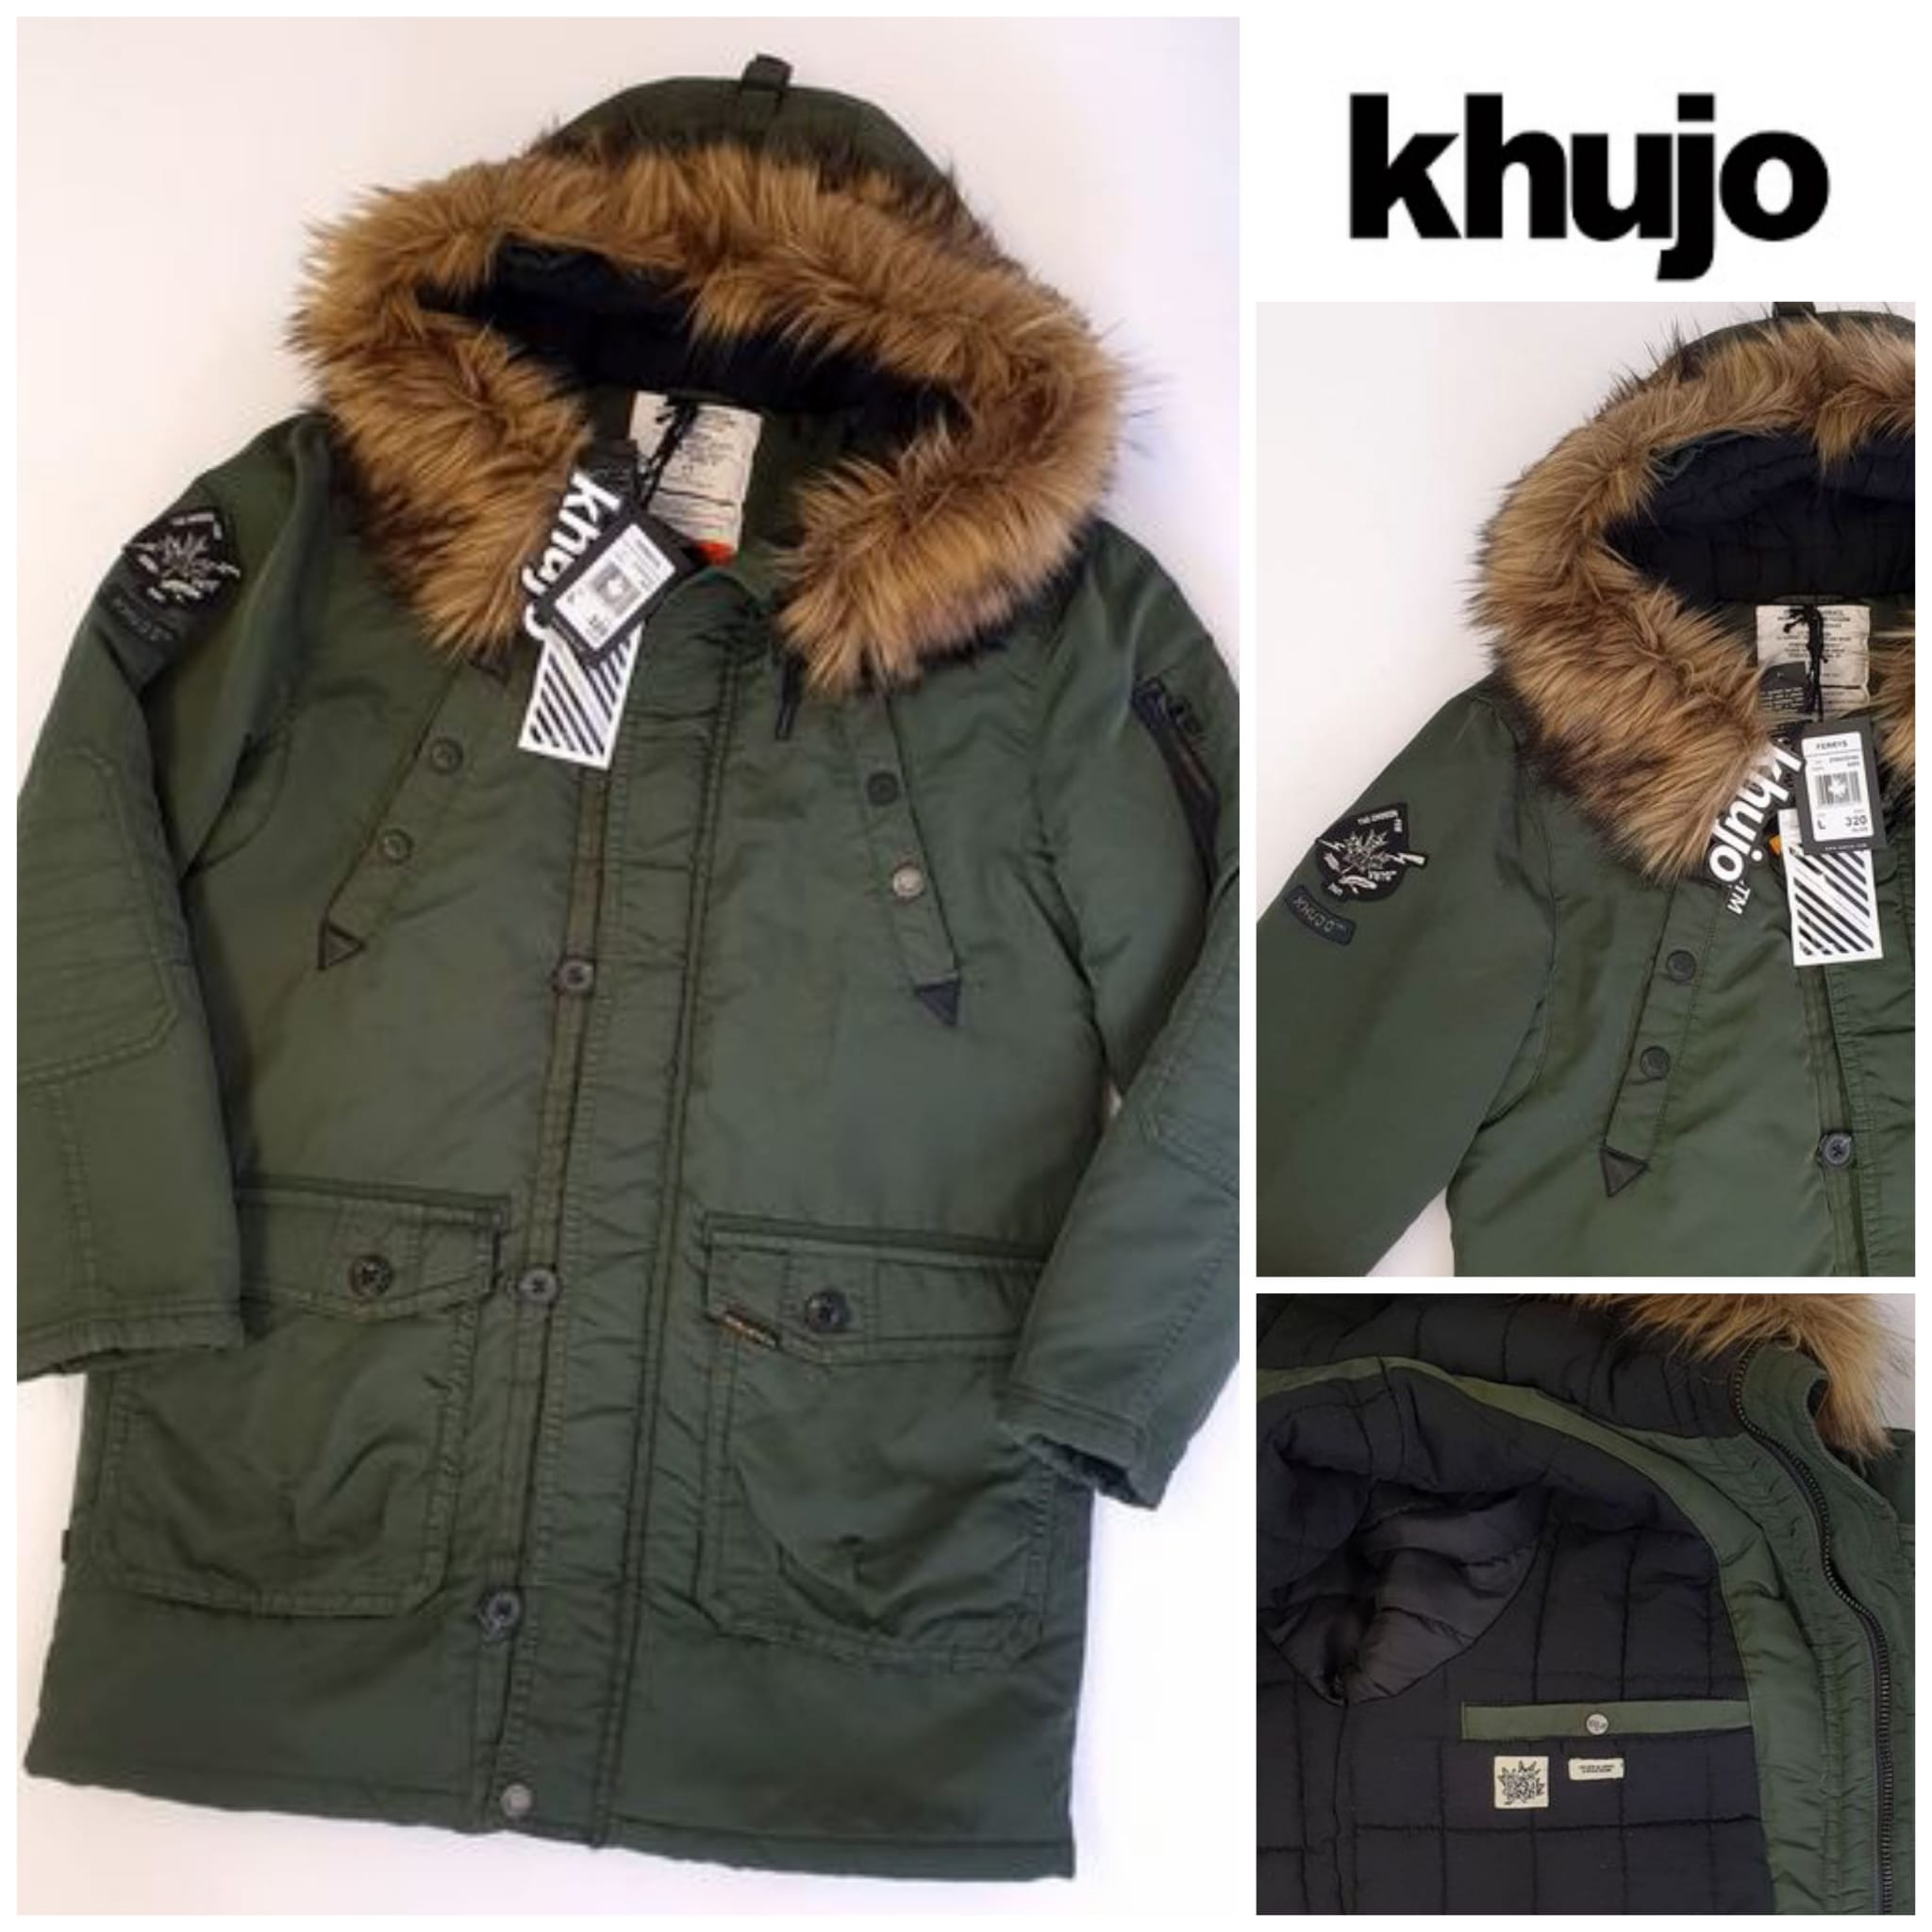 Khujo winter men's jacket